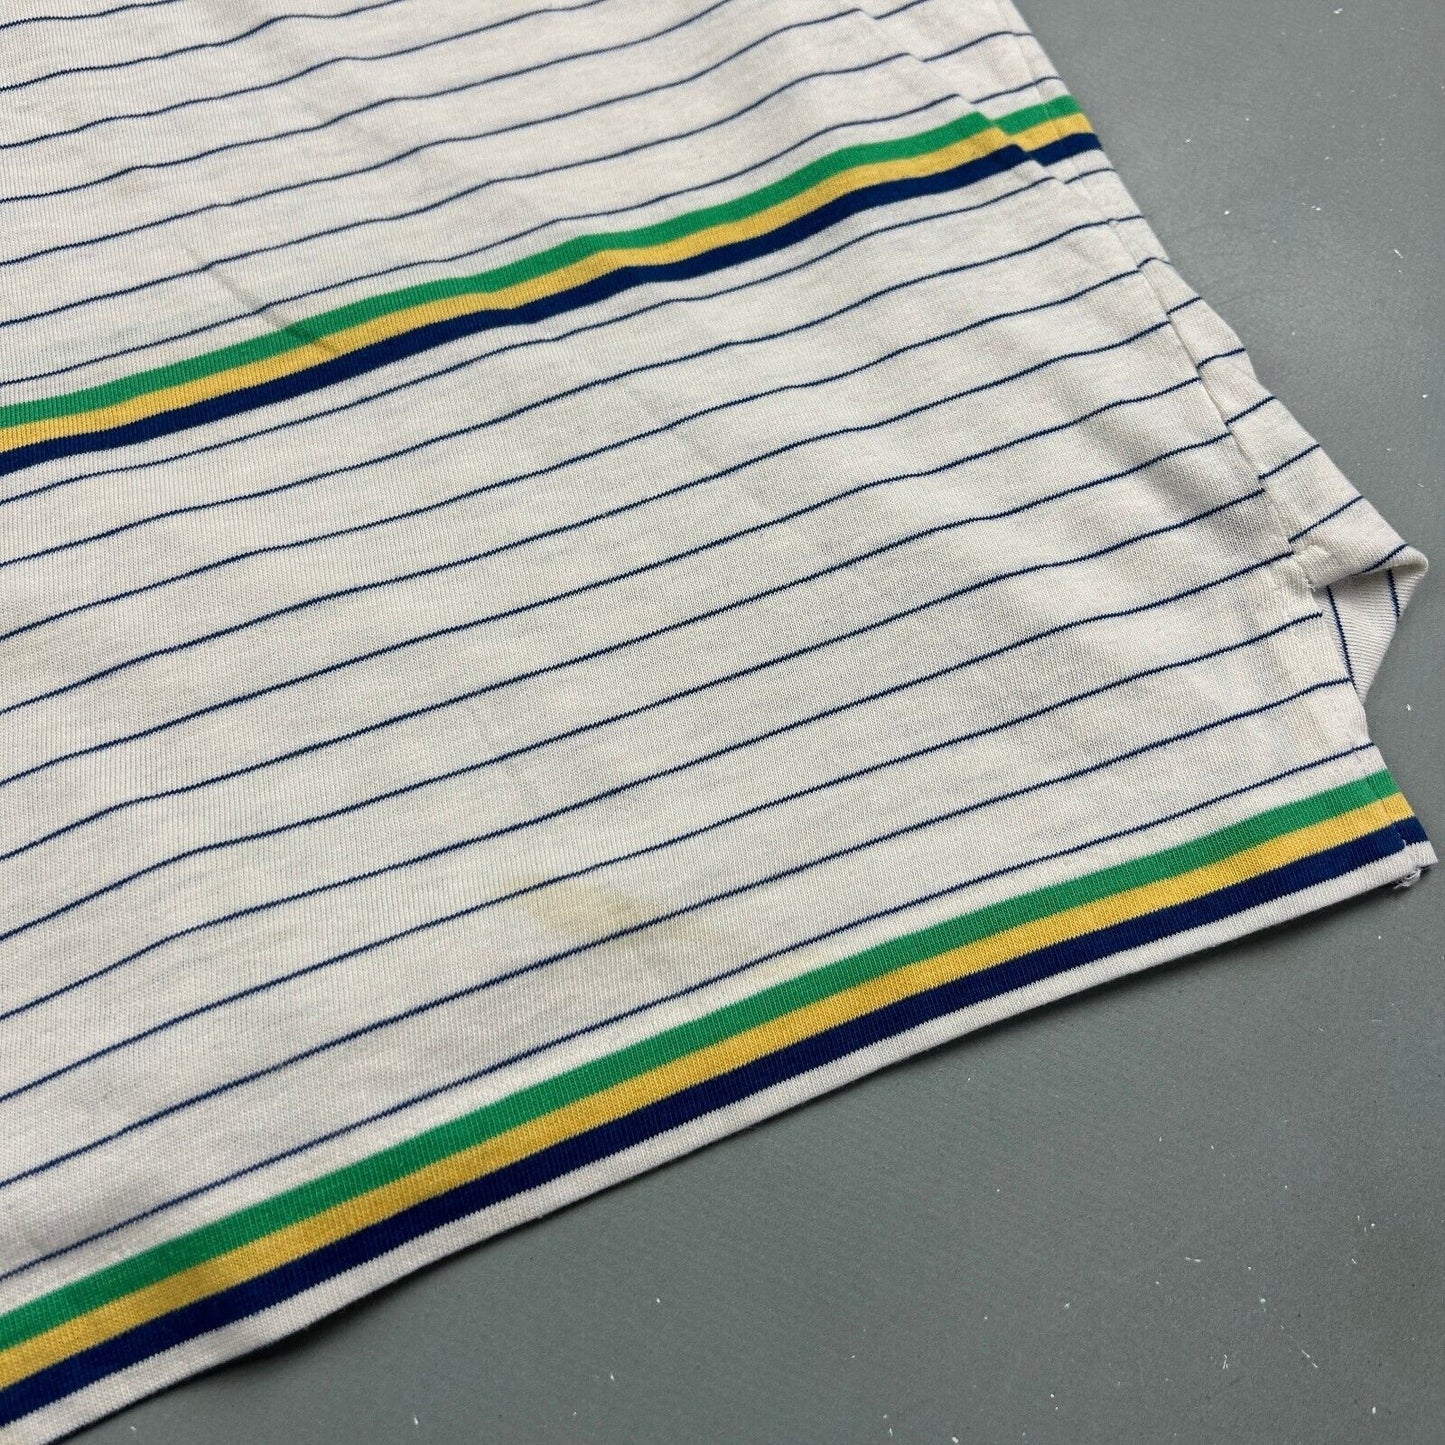 VINTAGE 90s Lacoste White Striped Polo Shirt sz Medium Adult